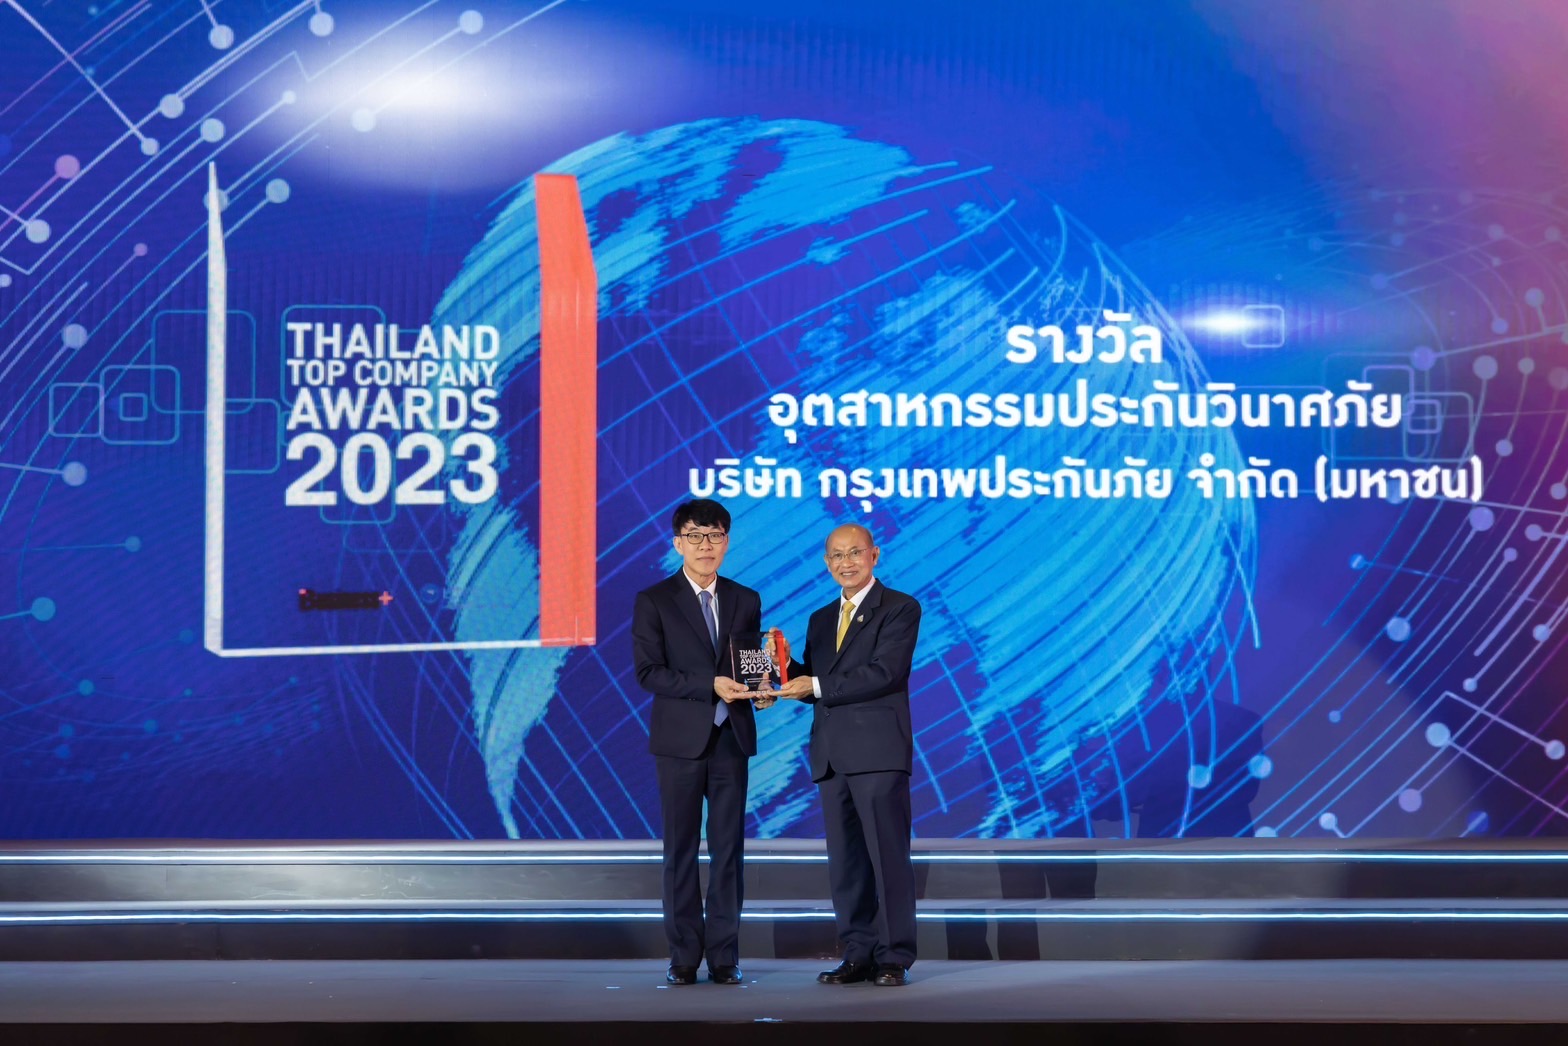 BKI สุดยอดองค์กร รับรางวัลแห่งความภาคภูมิใจ Thailand Top Company Awards 2023 ประเภทอุตสาหกรรมประกันวินาศภัย